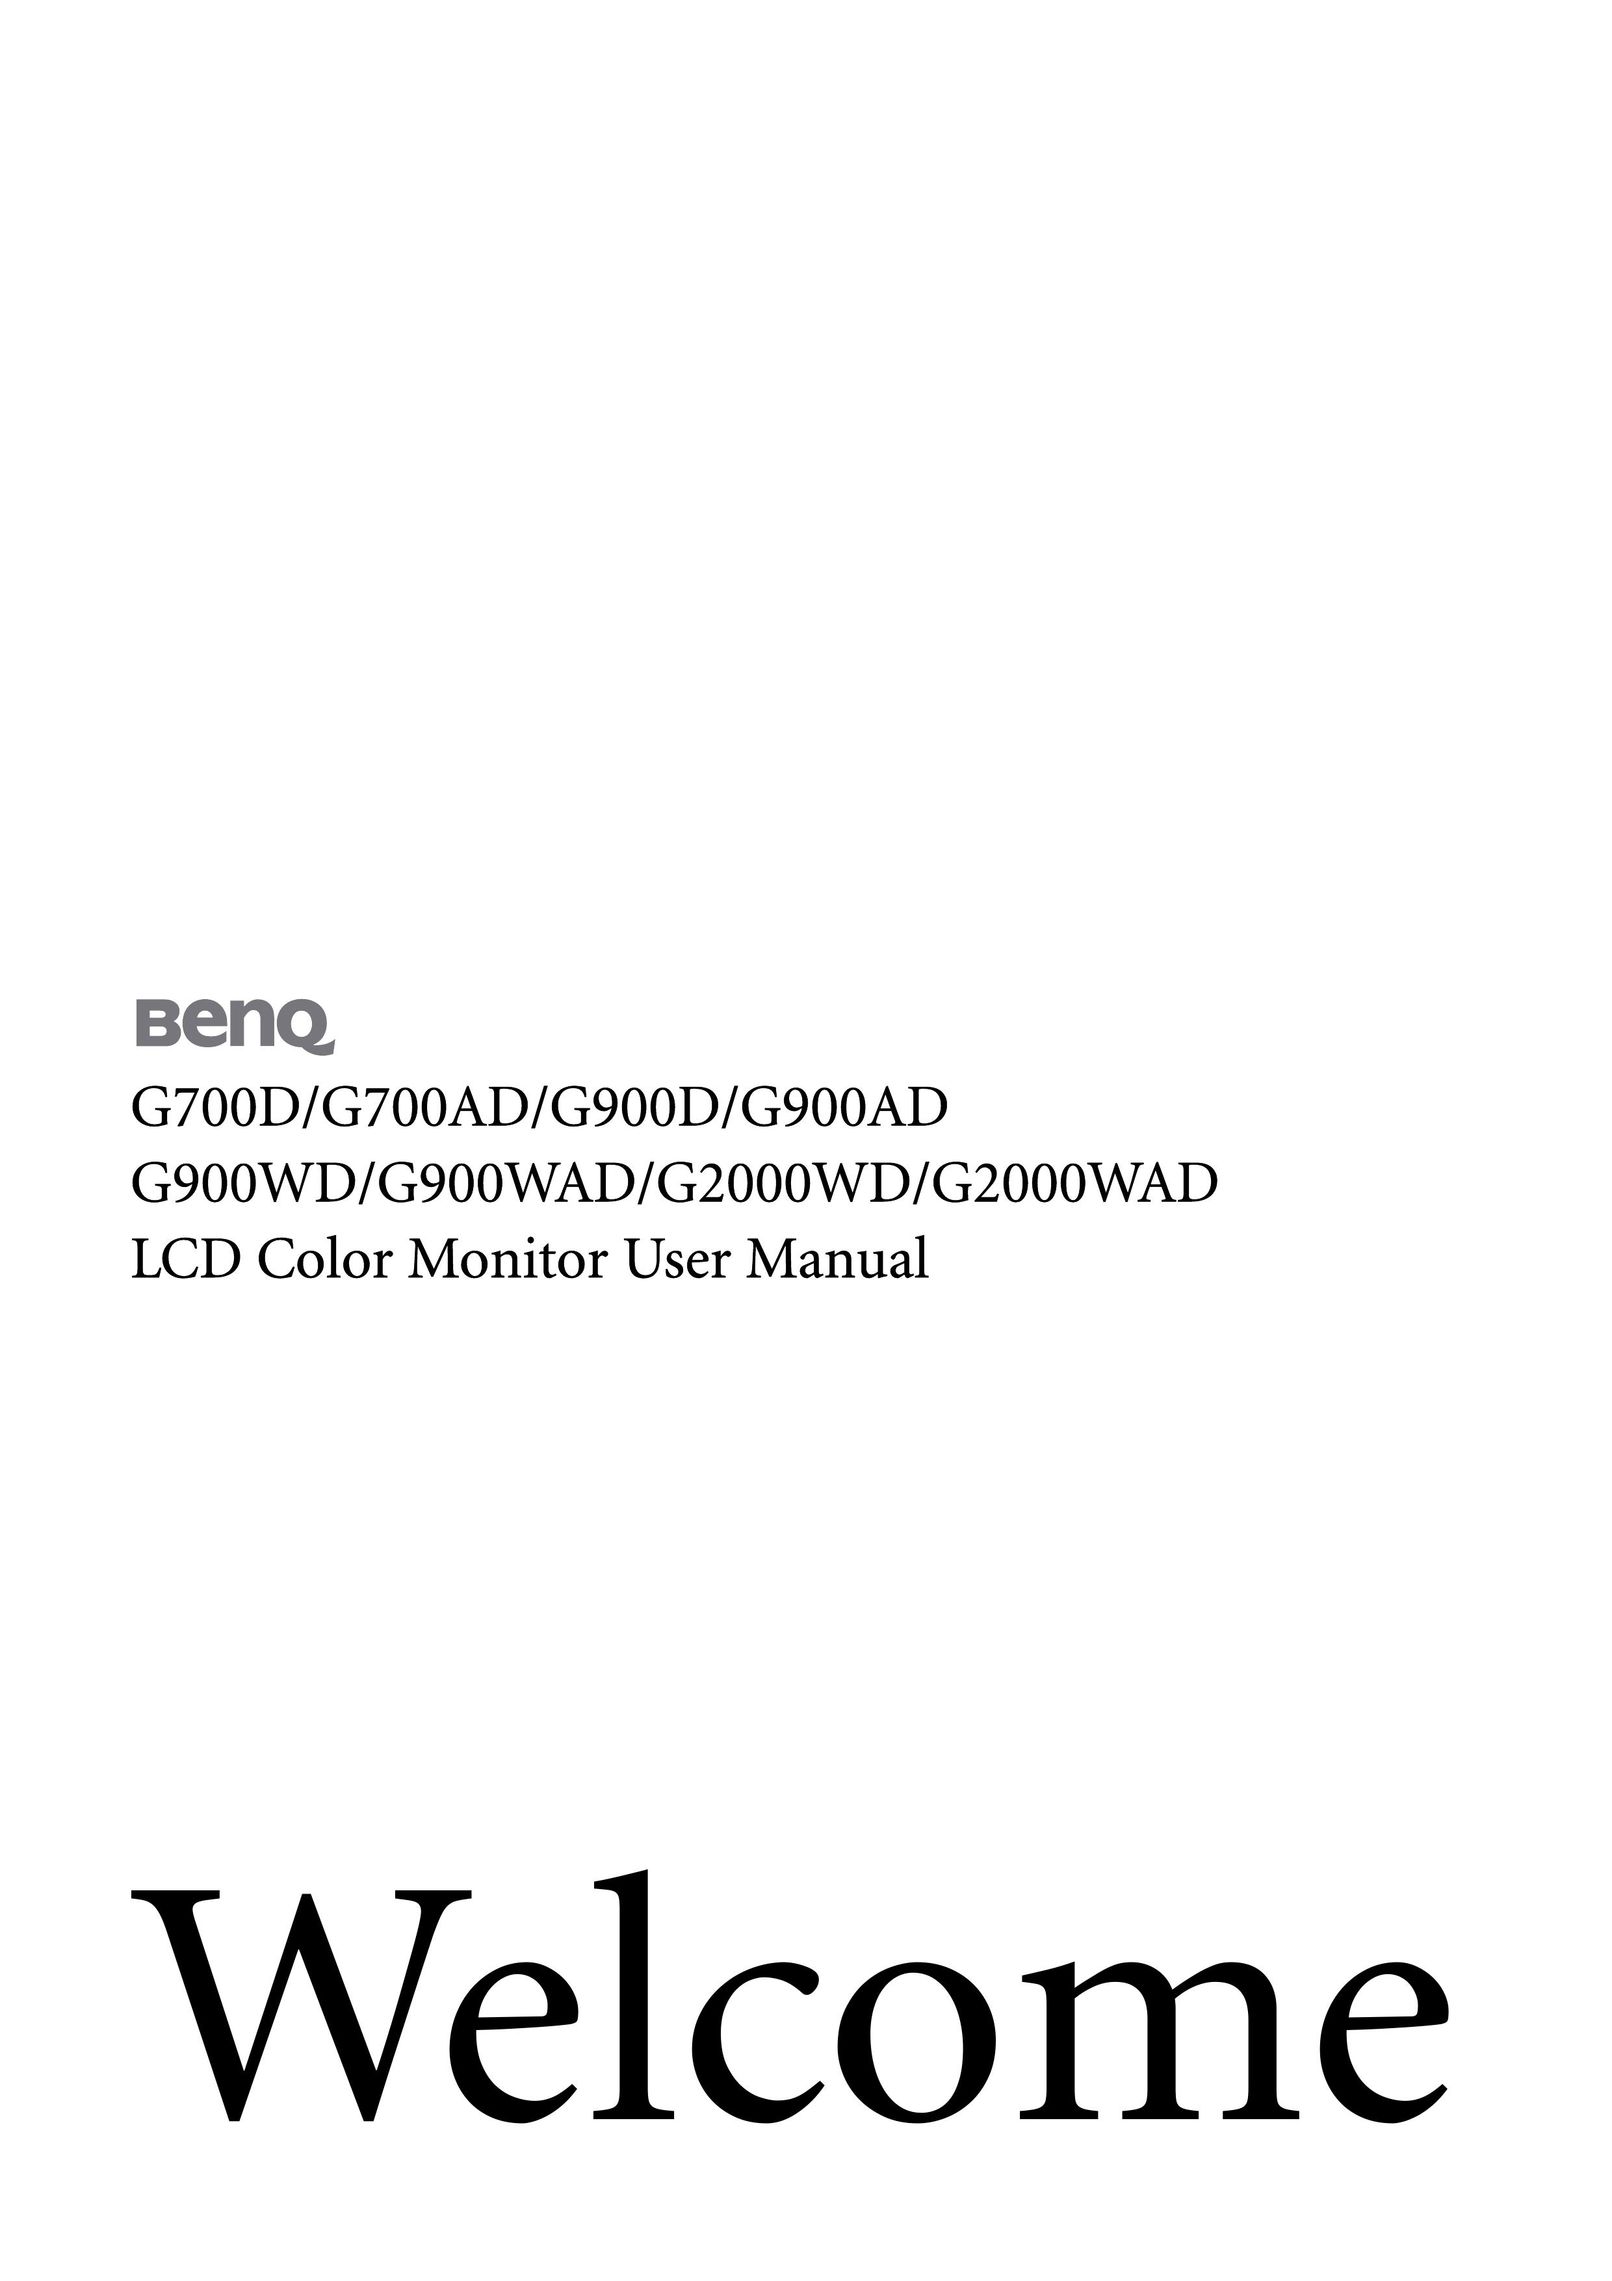 BenQ G2000WAD Computer Monitor User Manual